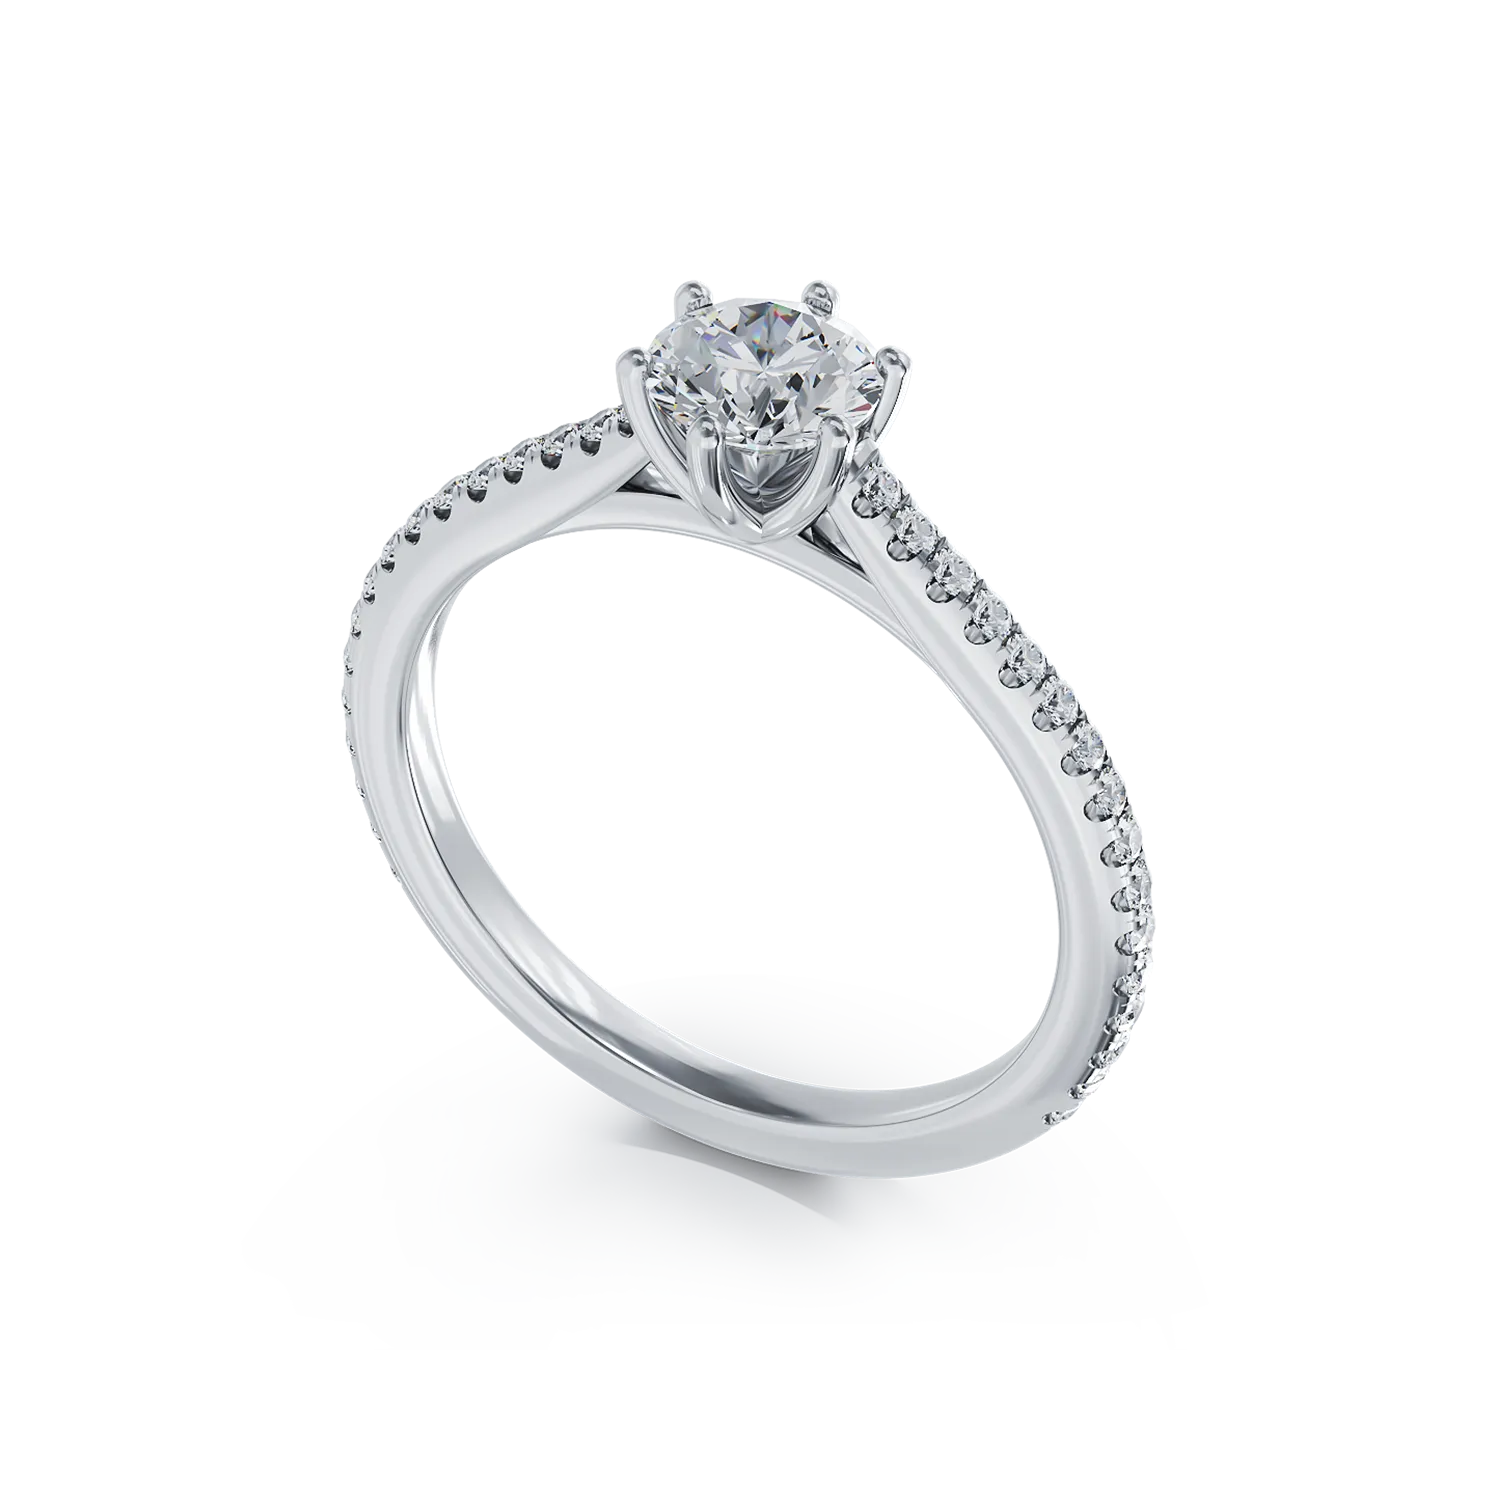 Platinum engagement ring with 0.5ct diamond and 0.19ct diamonds